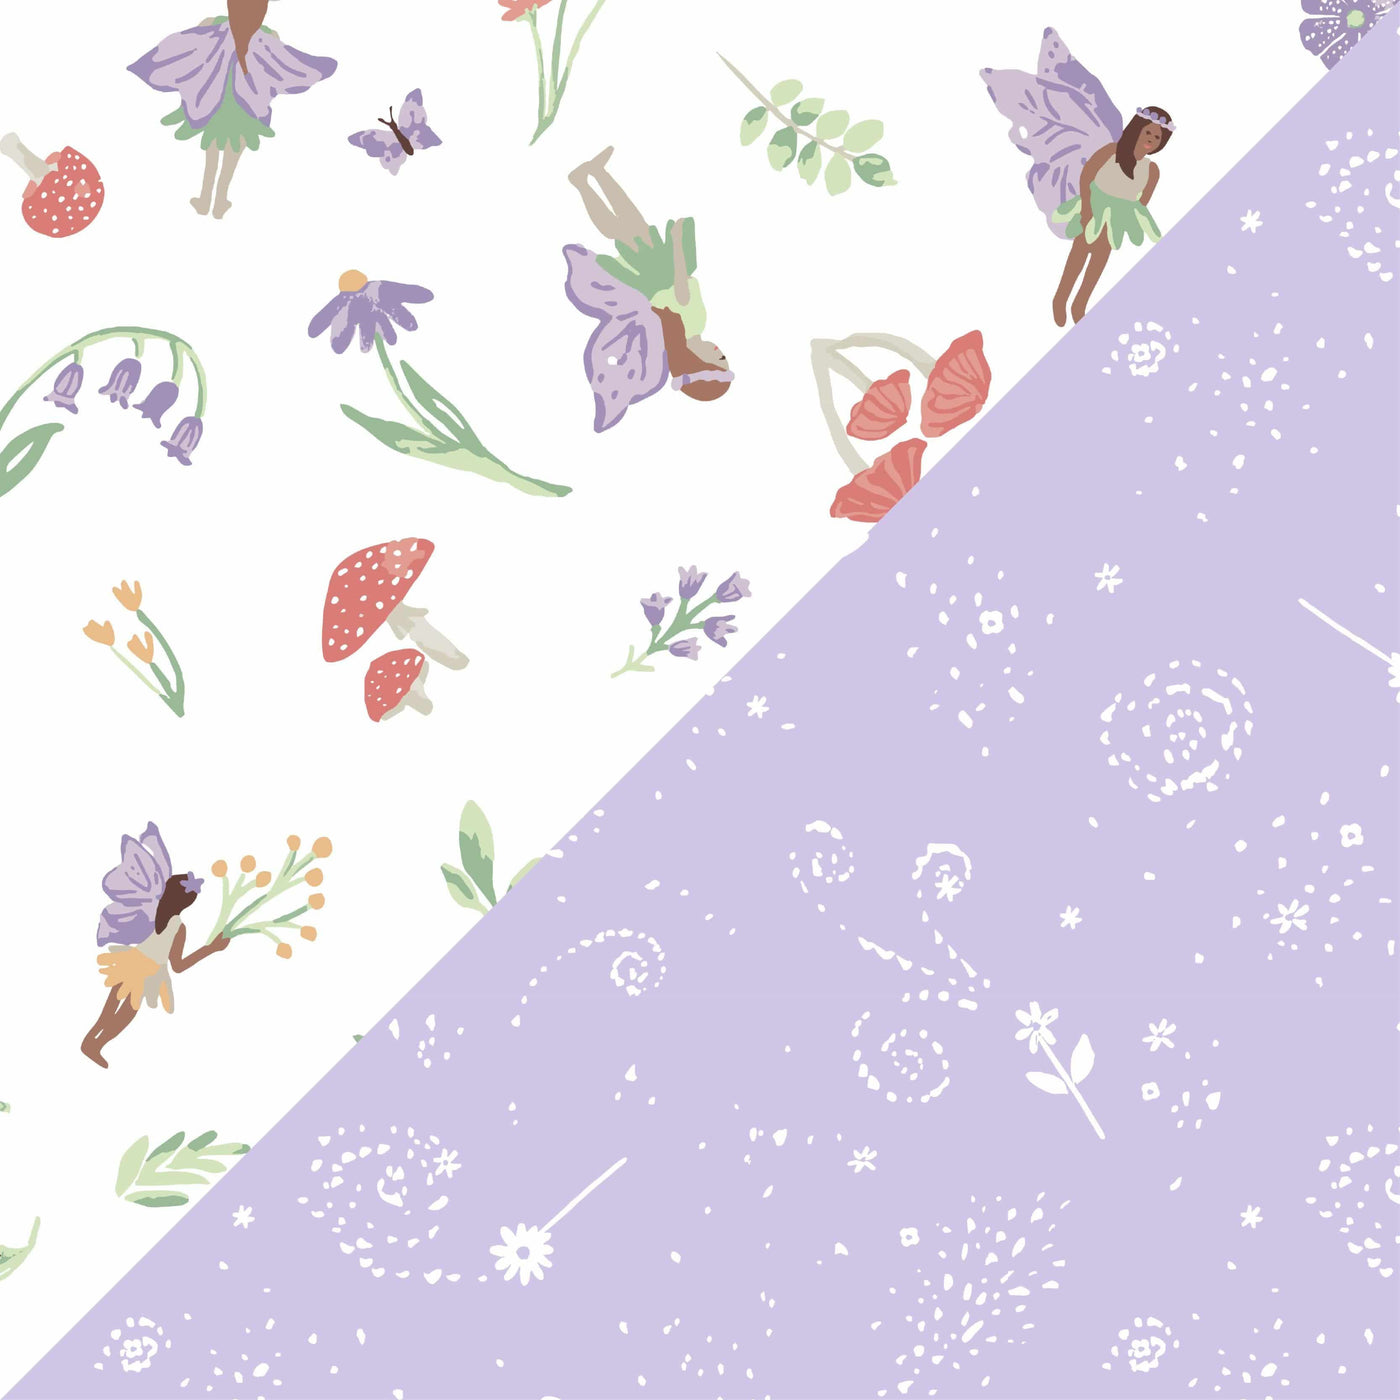 Woodland Fairy + Fairy Dust Oh-So-Soft Muslin Swaddle Blanket Set - Swaddle Blanket - Bebe au Lait